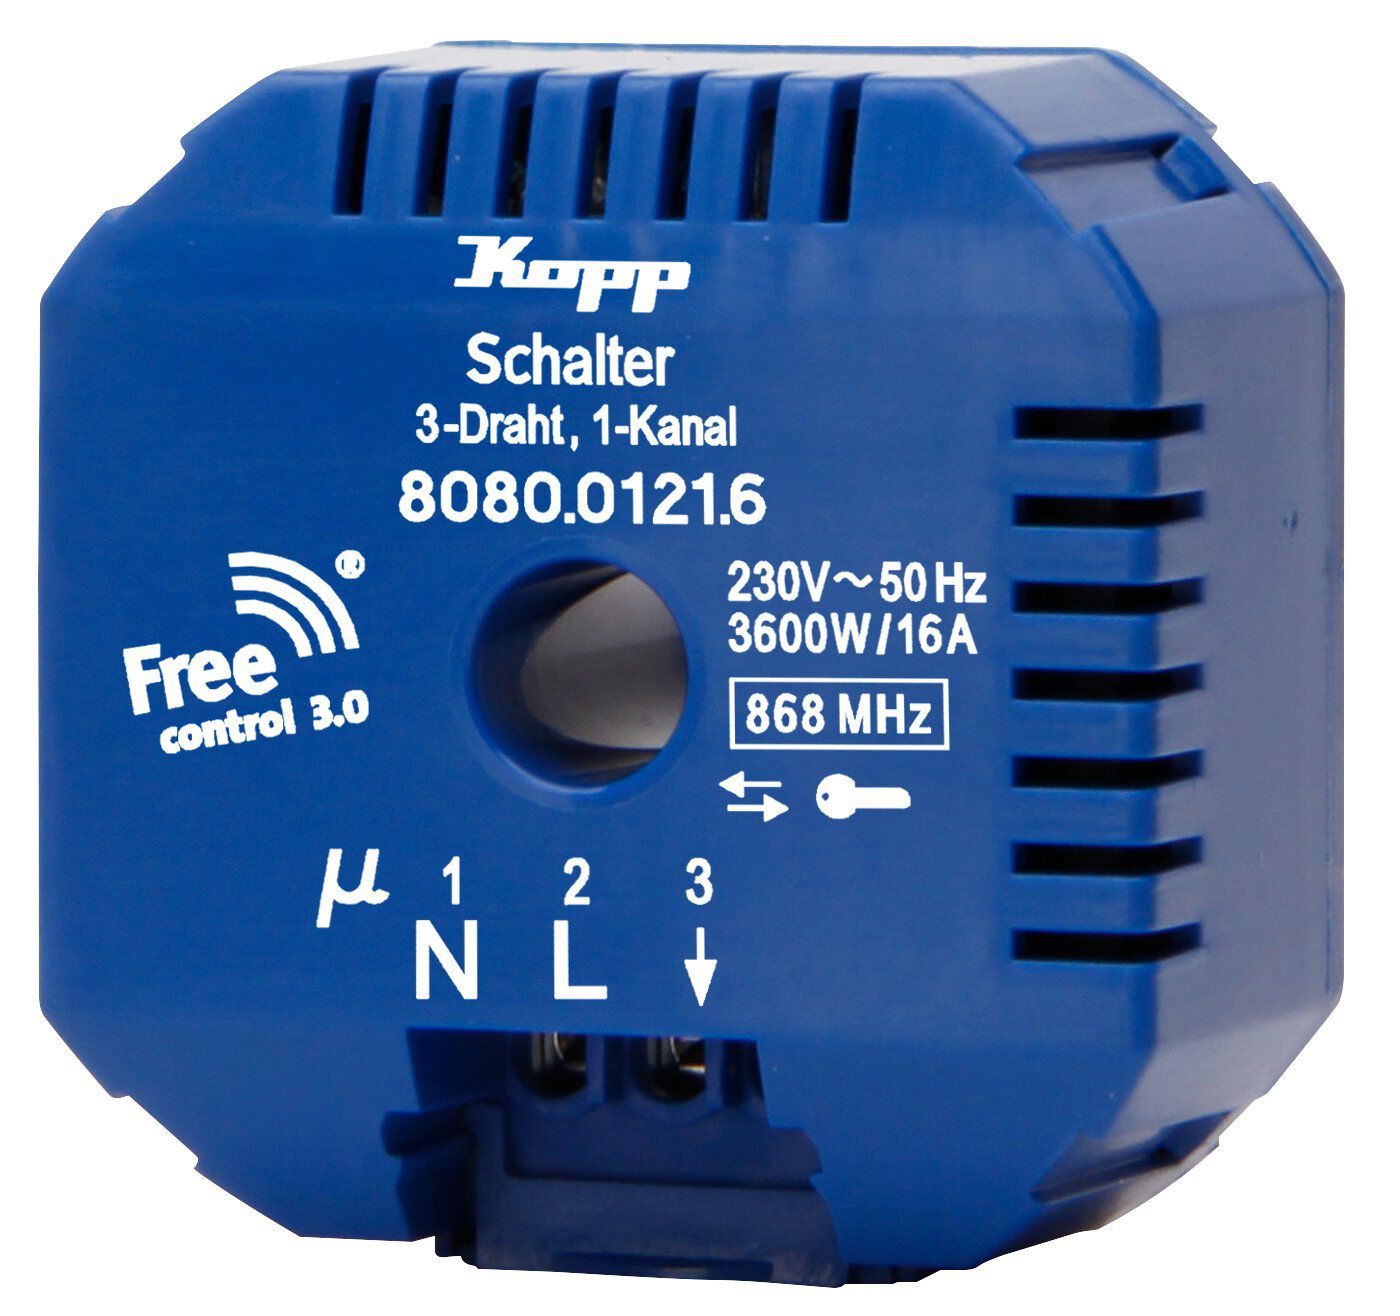 Kopp 808001216 Free Control 3.0 Funk Empfänger 1 Kanal/3-Draht